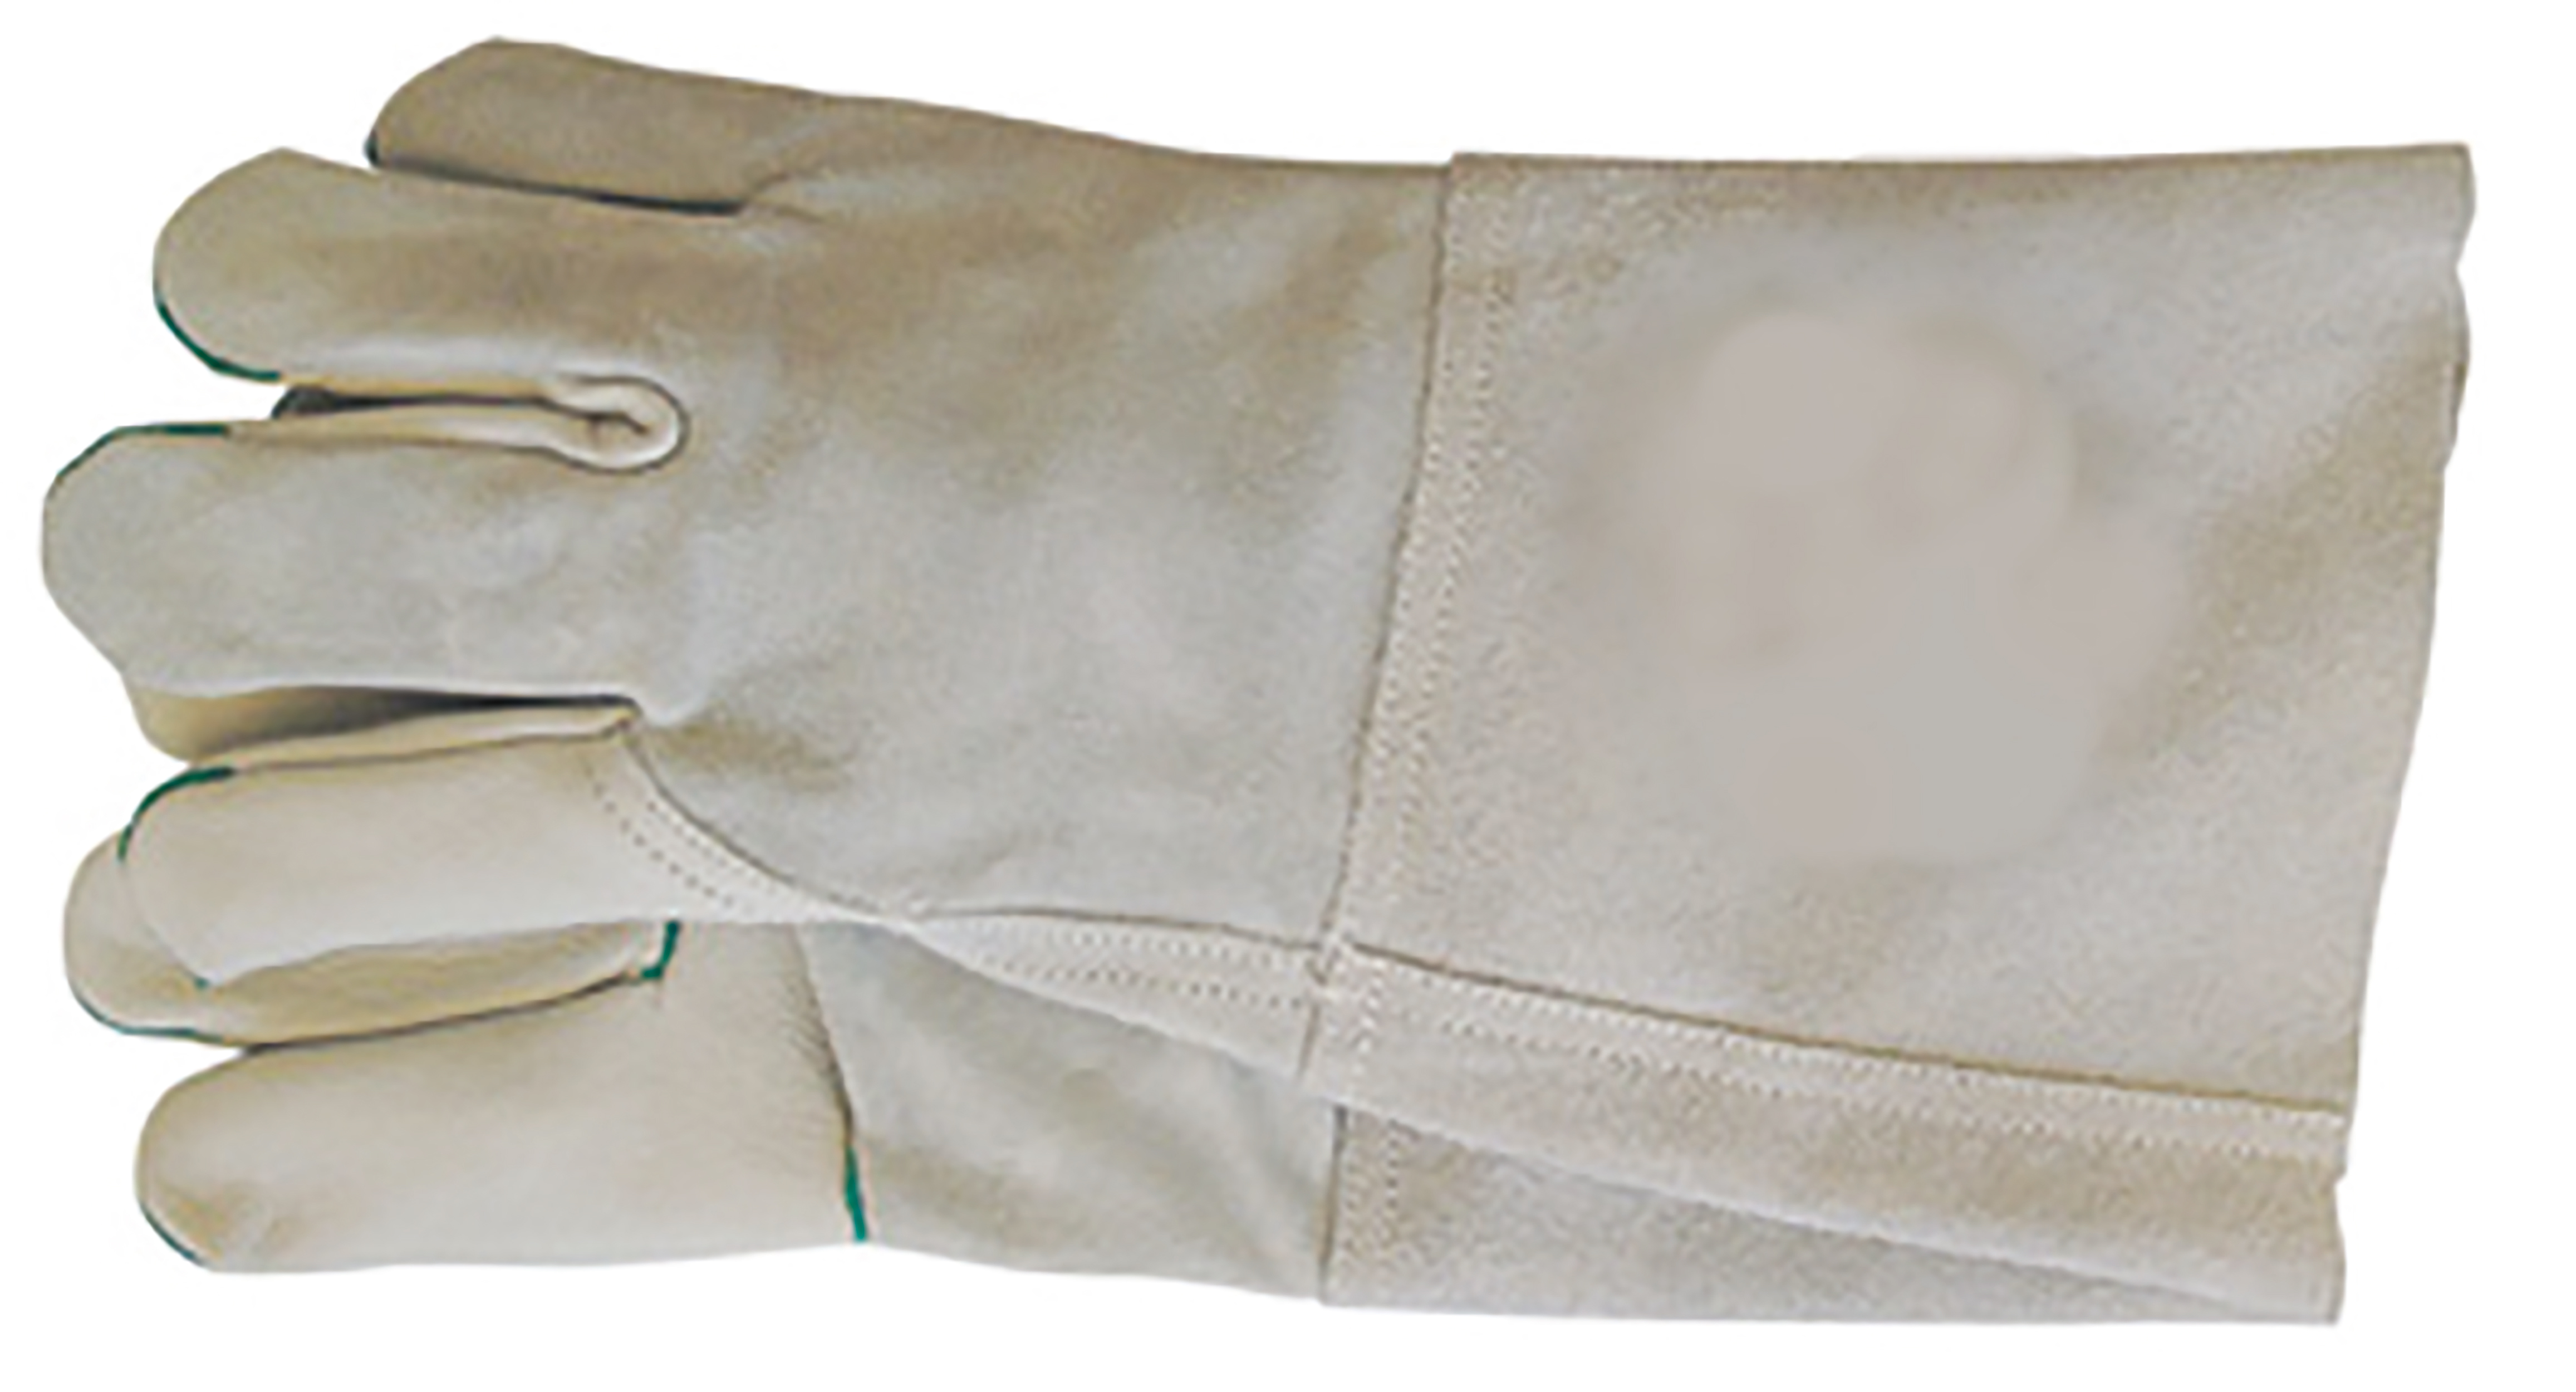 Schweisserhandschuhe, 5 Fingerhandschuhe, mit langer Stulpe: 35cm, Rindvoll-/Spaltleder, naturfarben, EN12477B